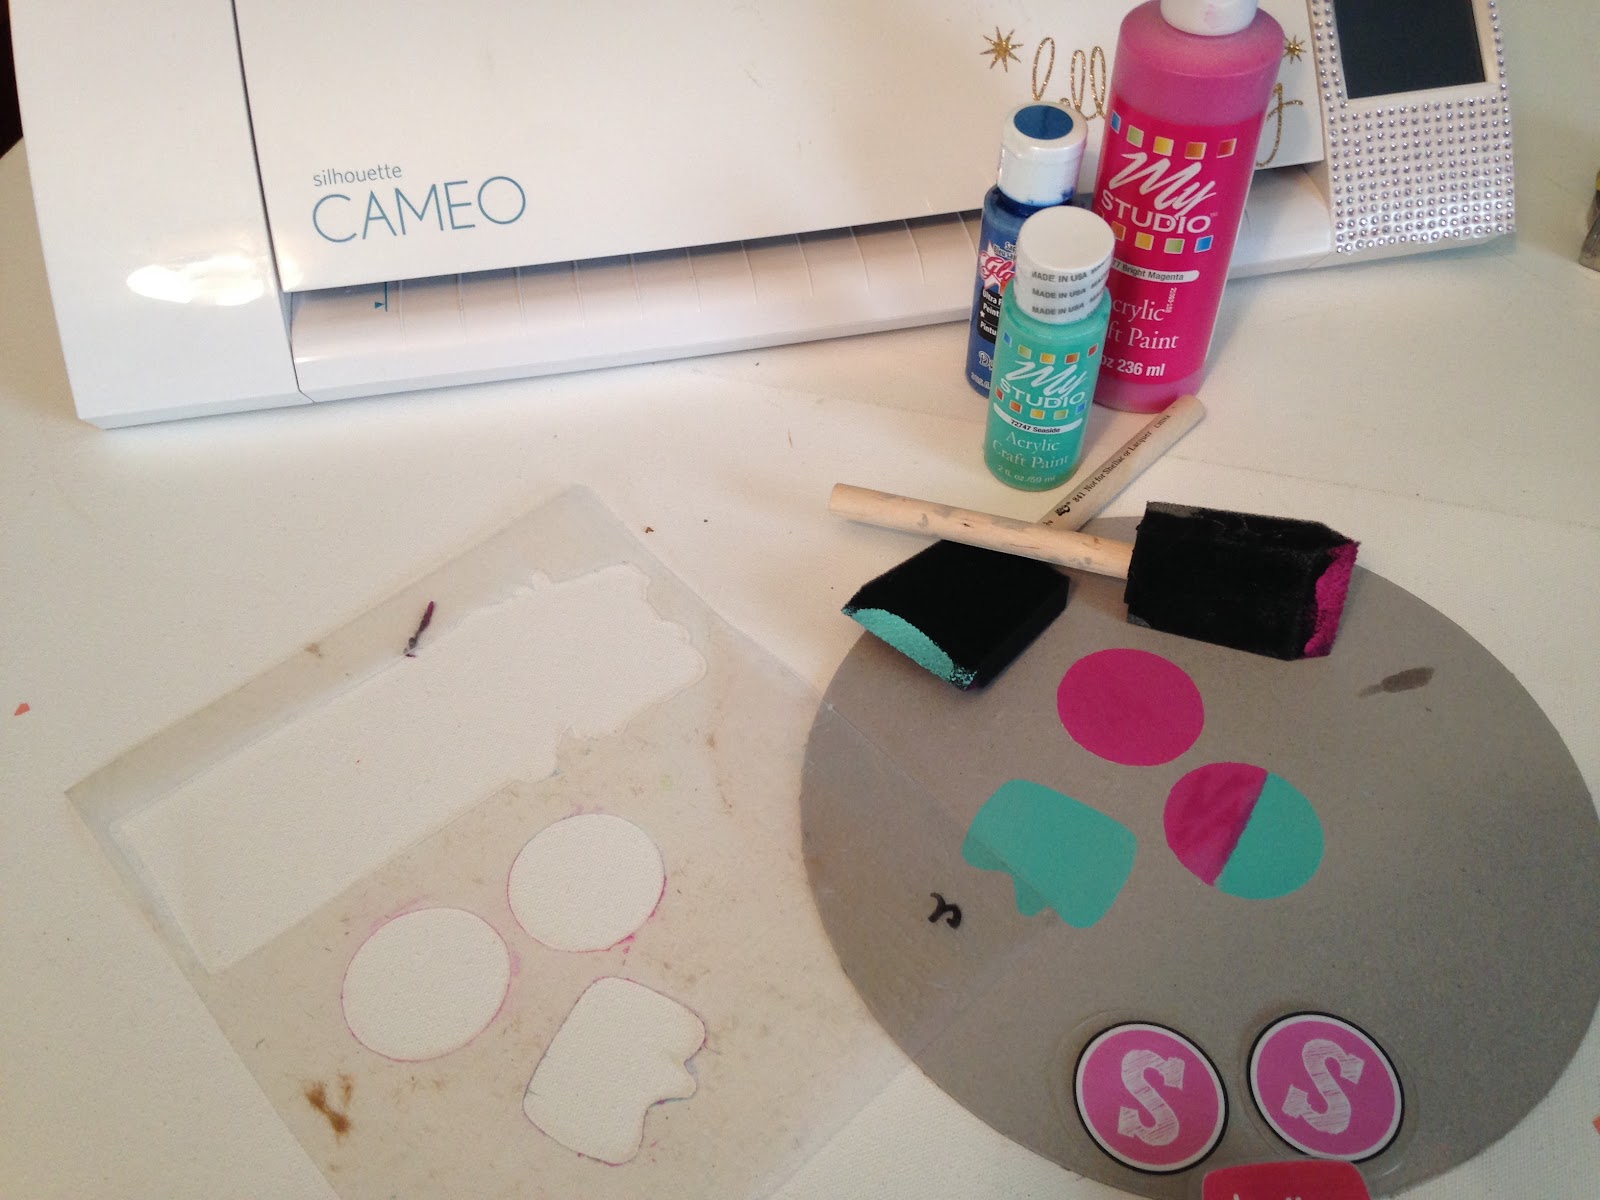 cutting acrylic with Cricut - Make reusable stencils or templates